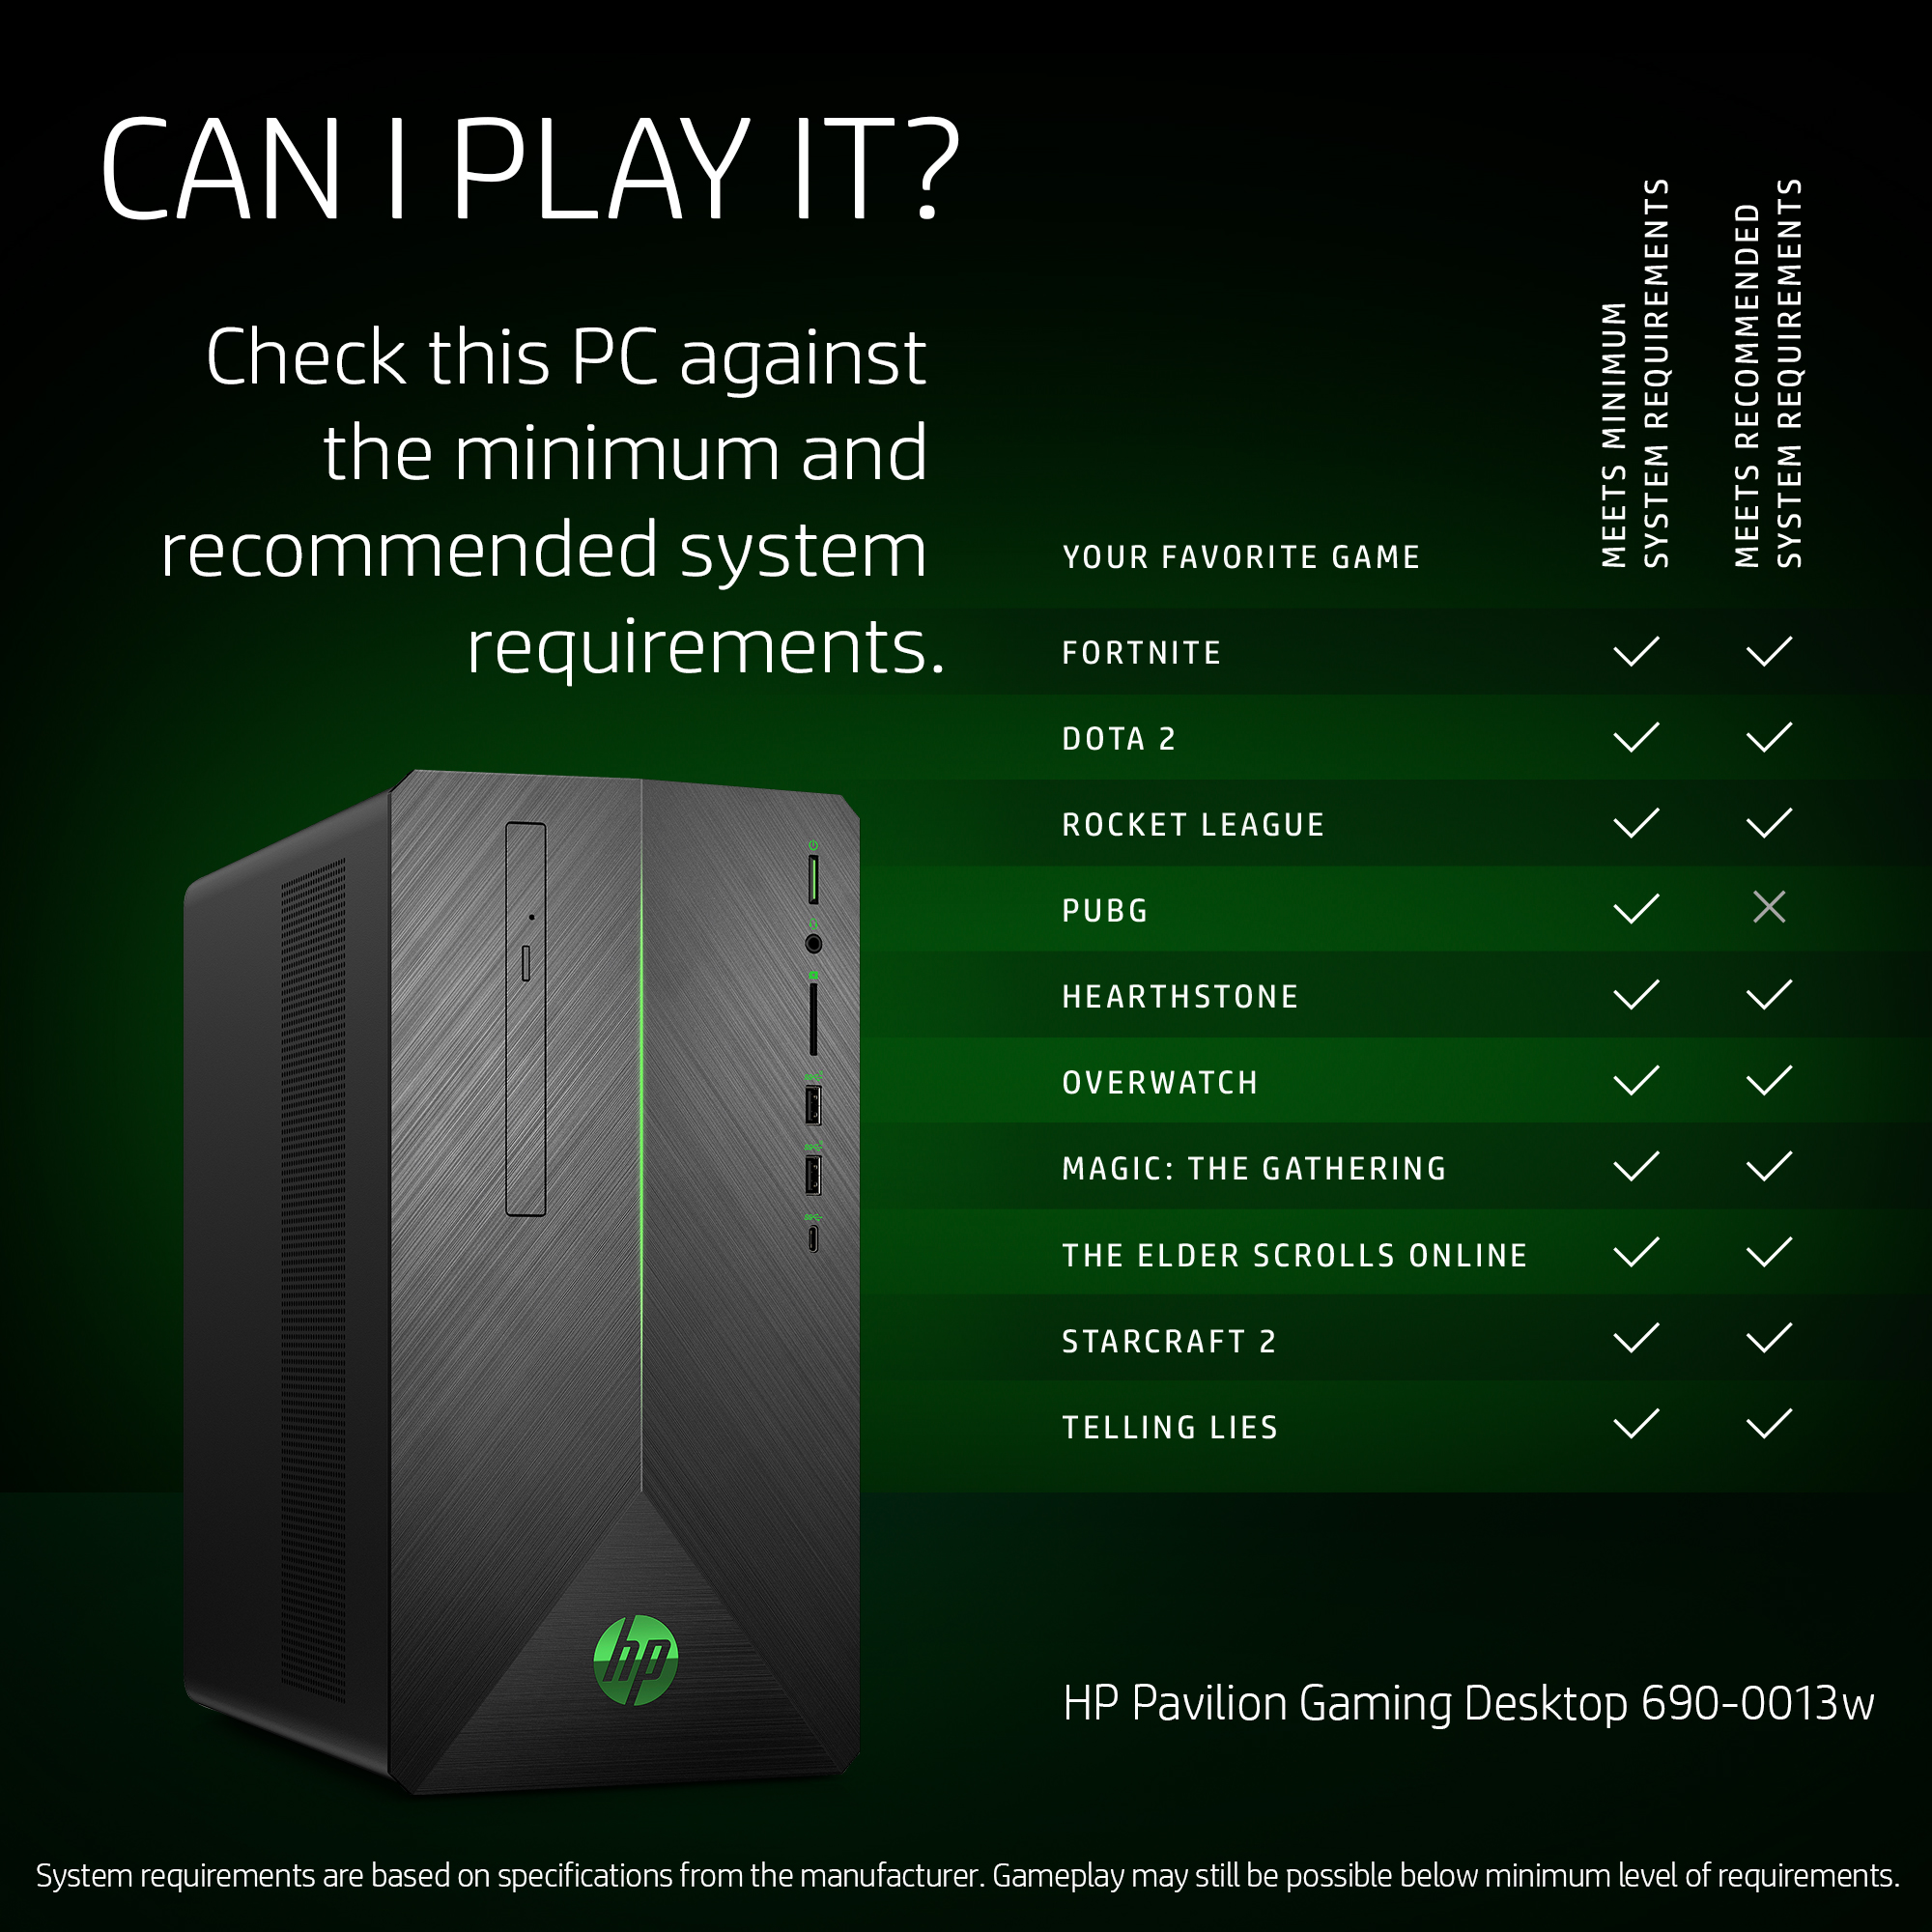 HP Pavilion Gaming Desktop AMD Ryzen 5 2400G, Nvidia 1050 GPU 1TB Storage, 8GB Memory - 690-0013w - image 2 of 8